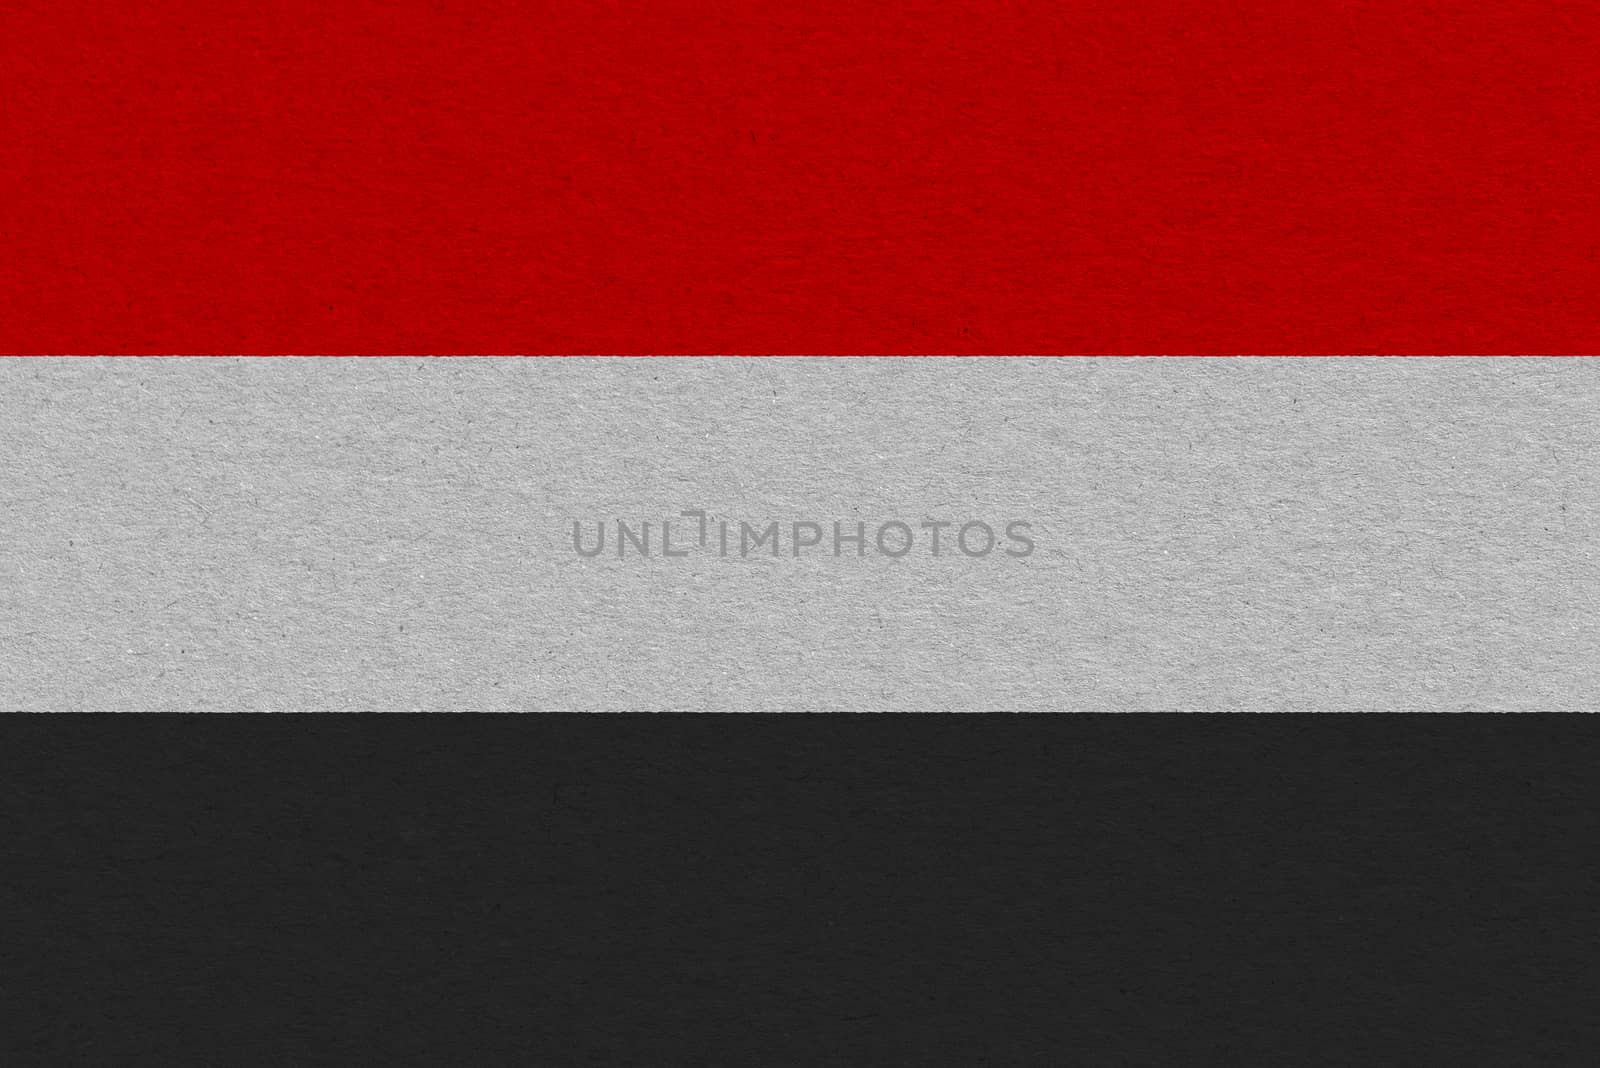 Yemen flag painted on paper. Patriotic background. National flag of Yemen